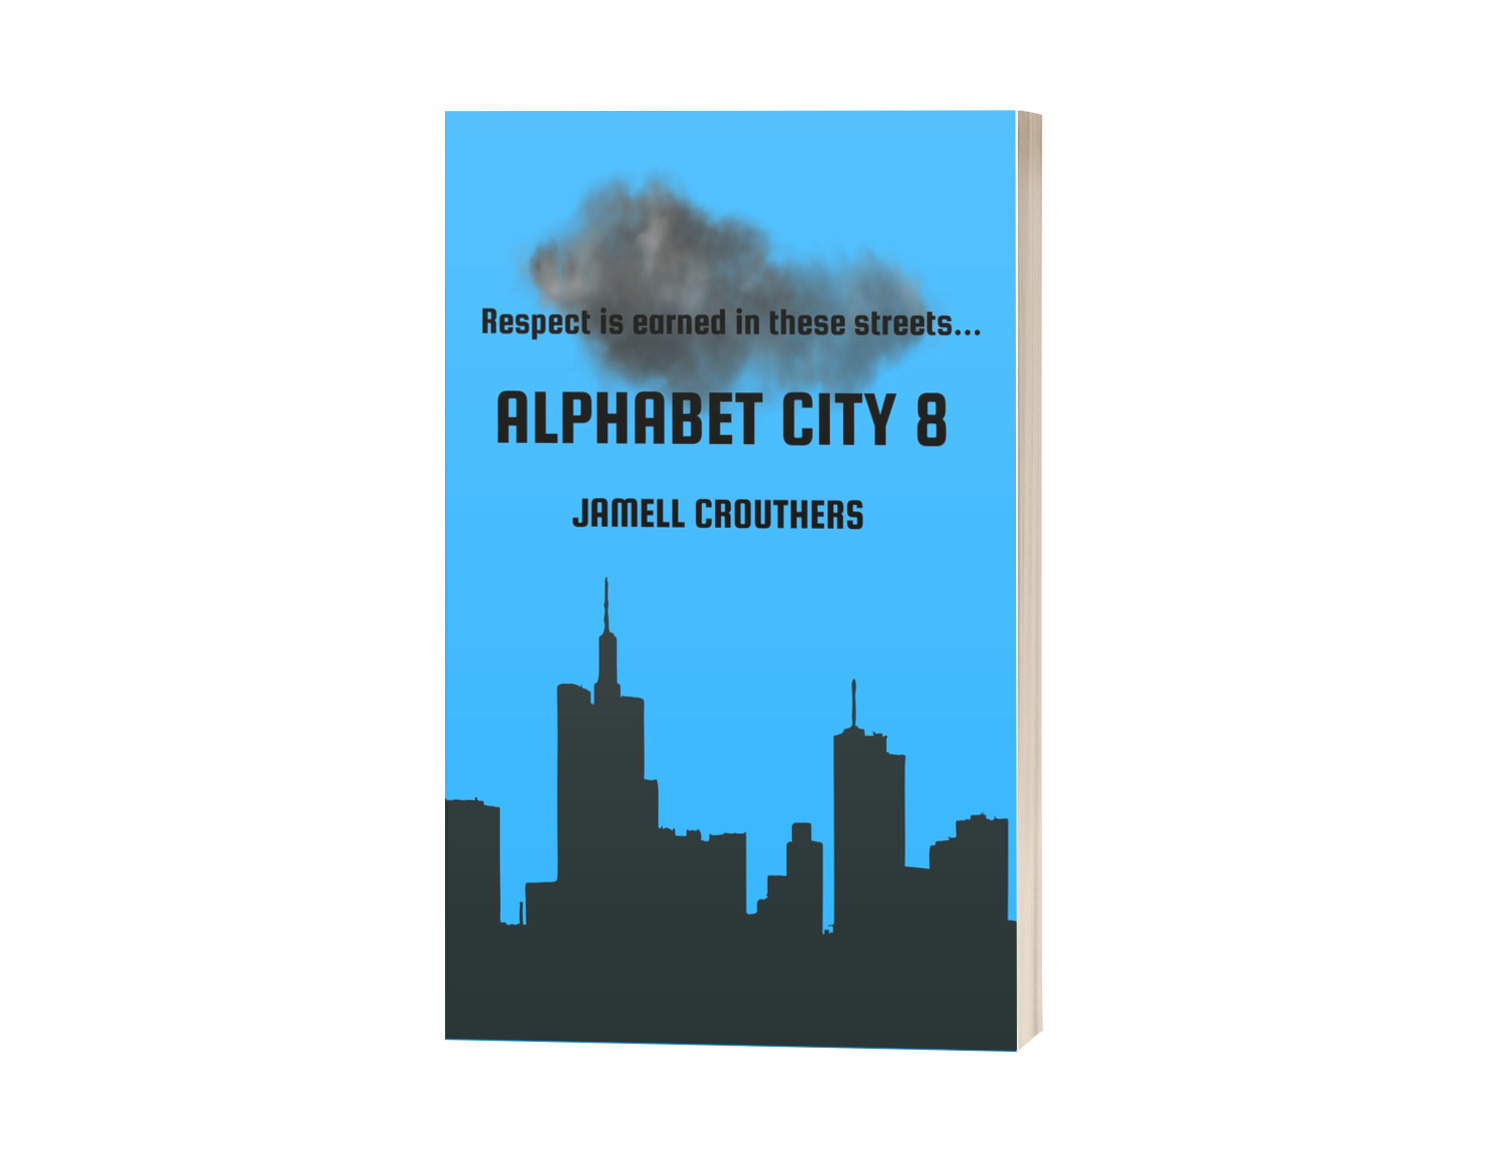 Writing 'Alphabet City 8'